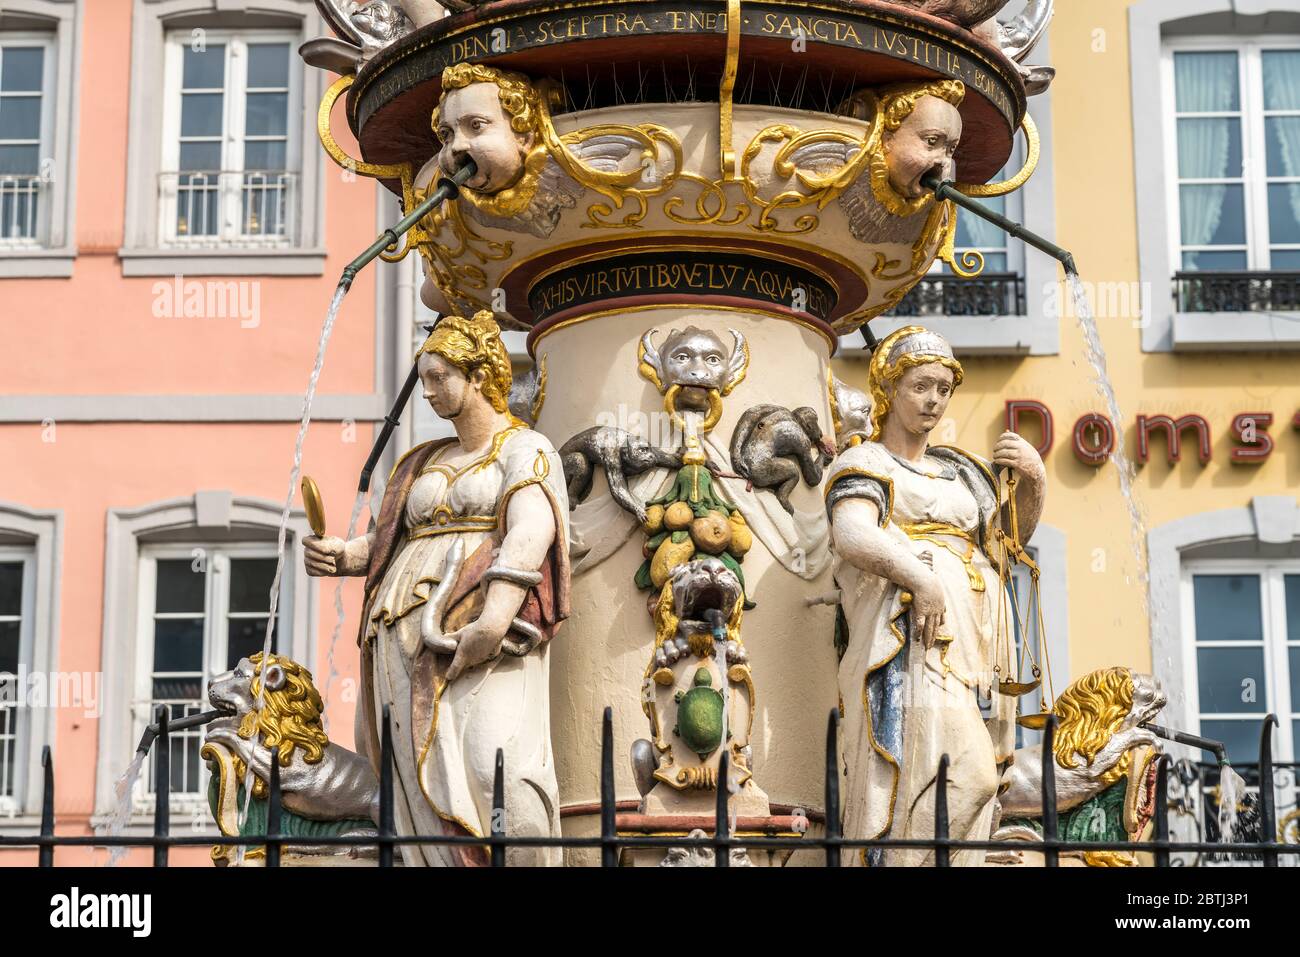 Petrusbrunnen auf dem Hauptmarkt in Trier, Rheinland-Pfalz, Deutschland | Fontana di San Pietro sulla piazza principale del mercato di Treviri, Renania-Palat Foto Stock